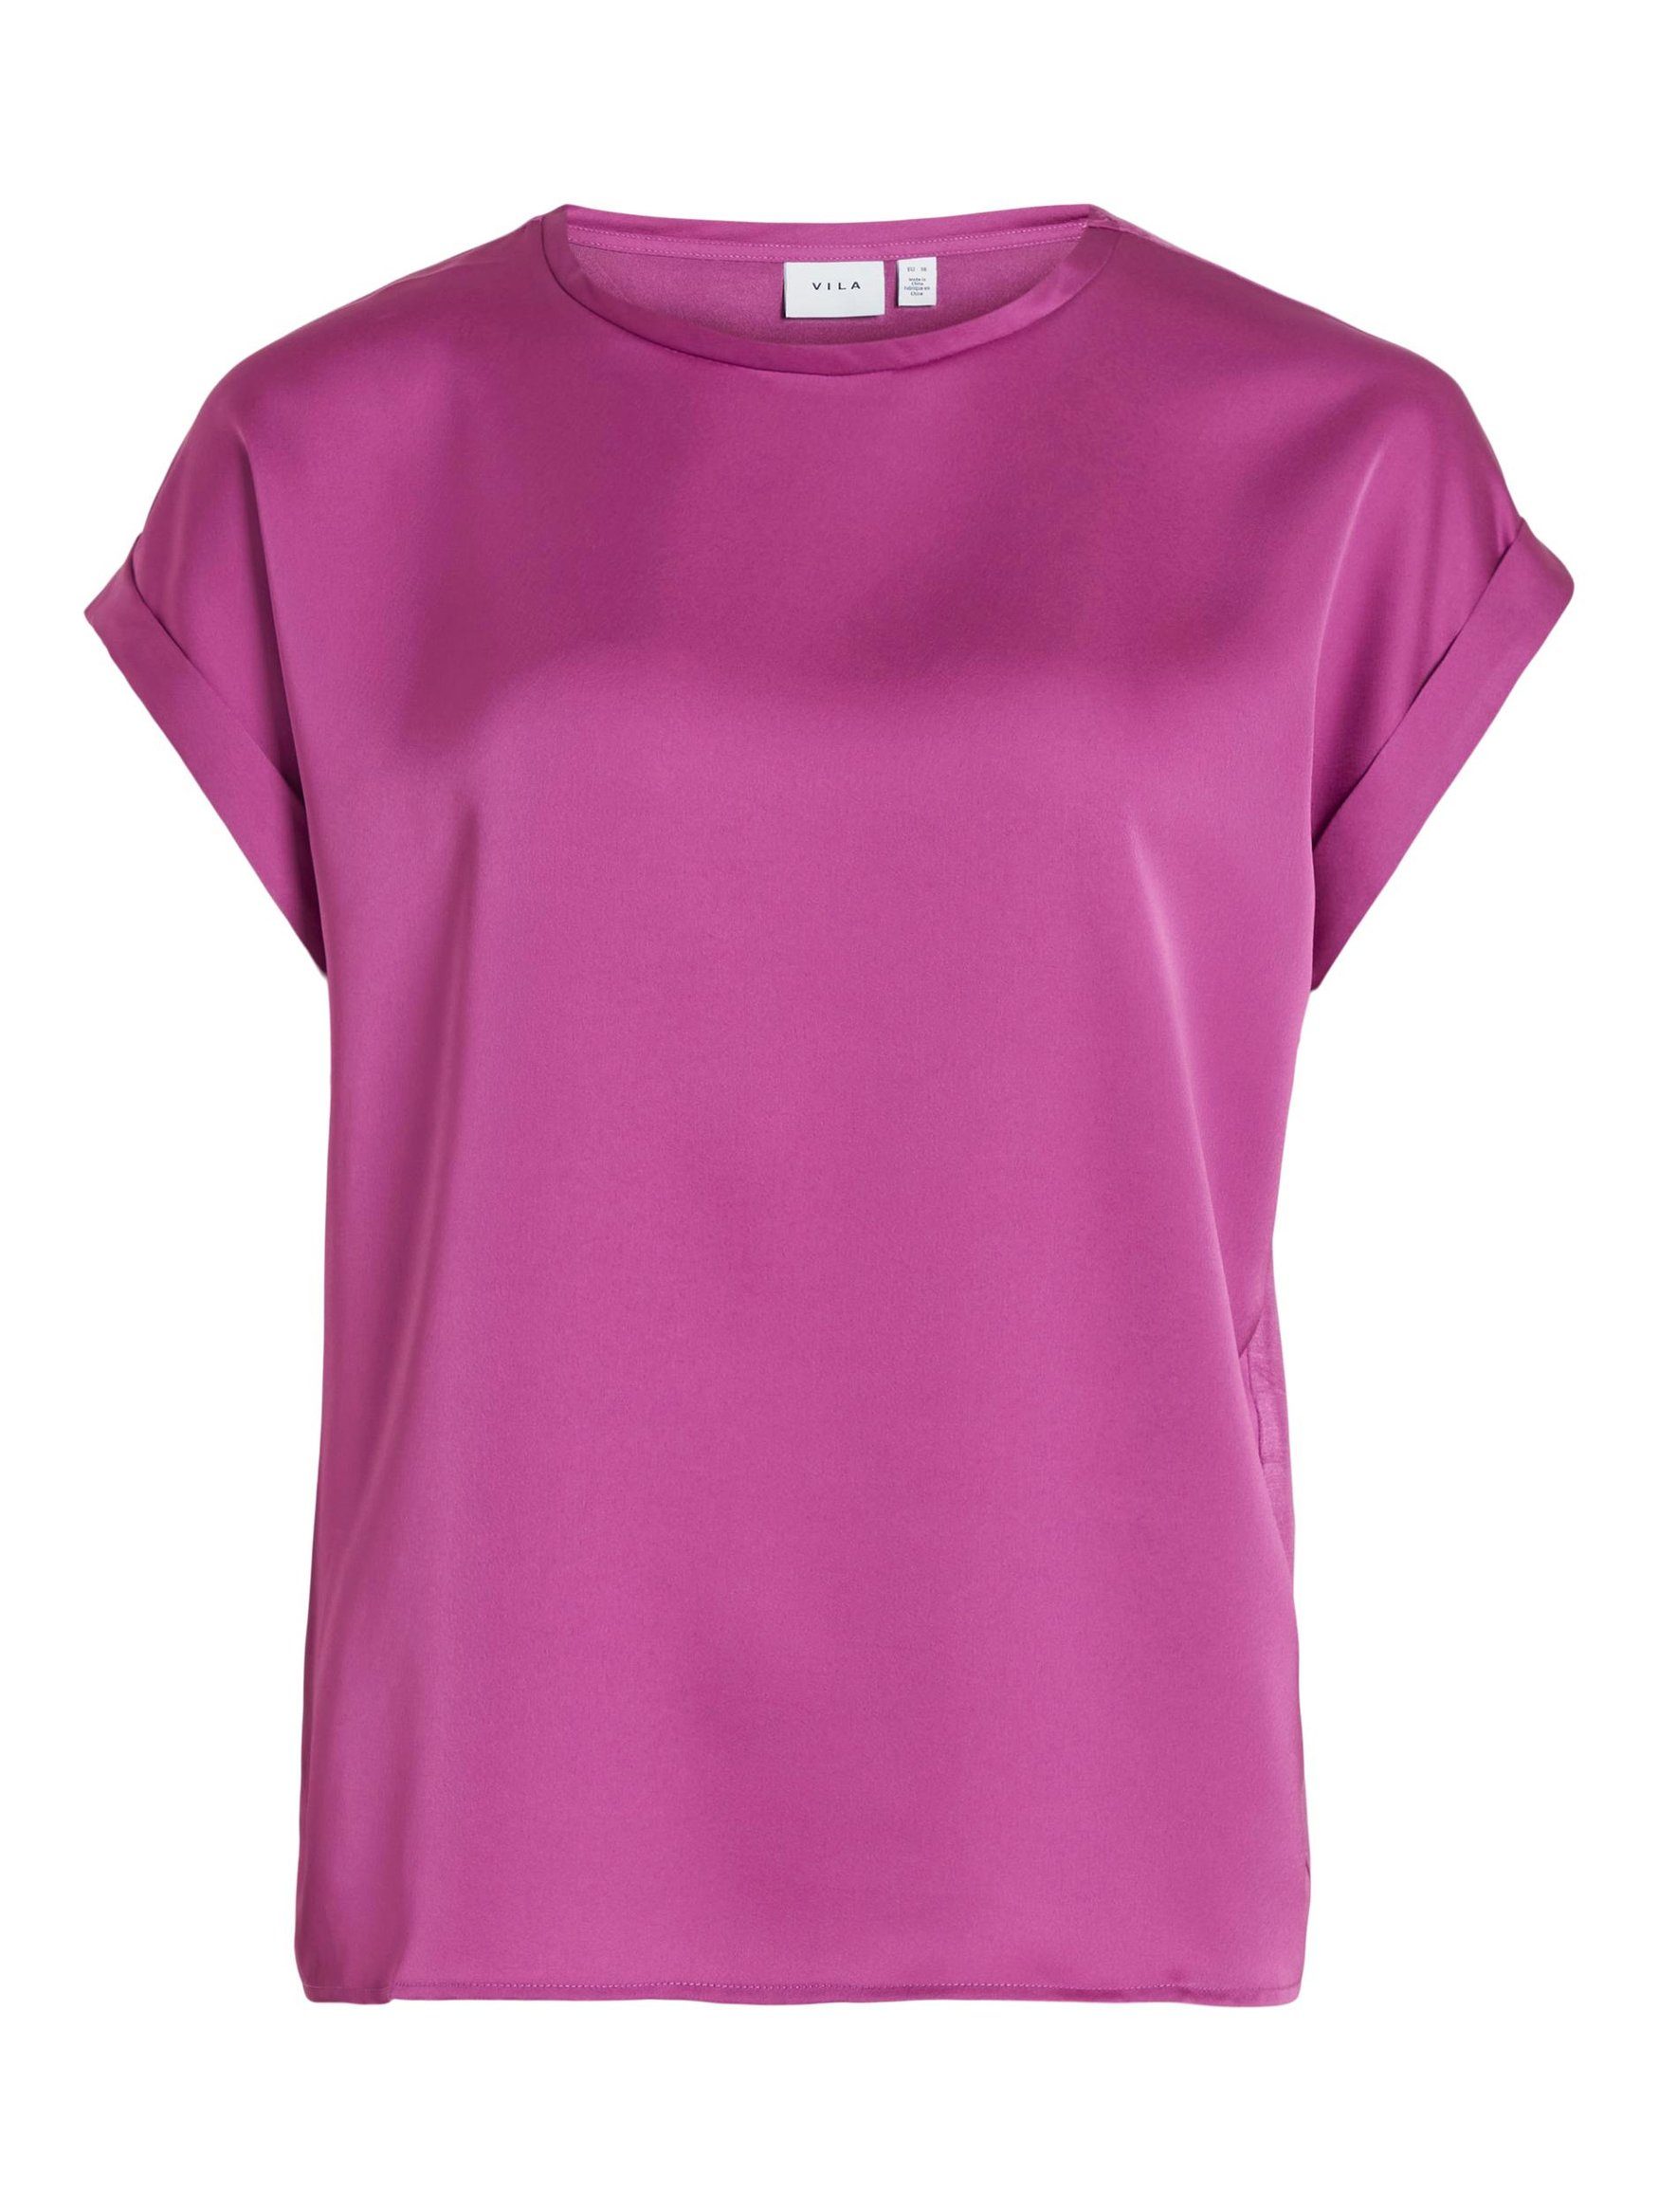 Vila T-Shirt Satain Blusen T-Shirt Kurzarm Basic Top Glänzend VIELLETTE 4599 in Neon Pink | 